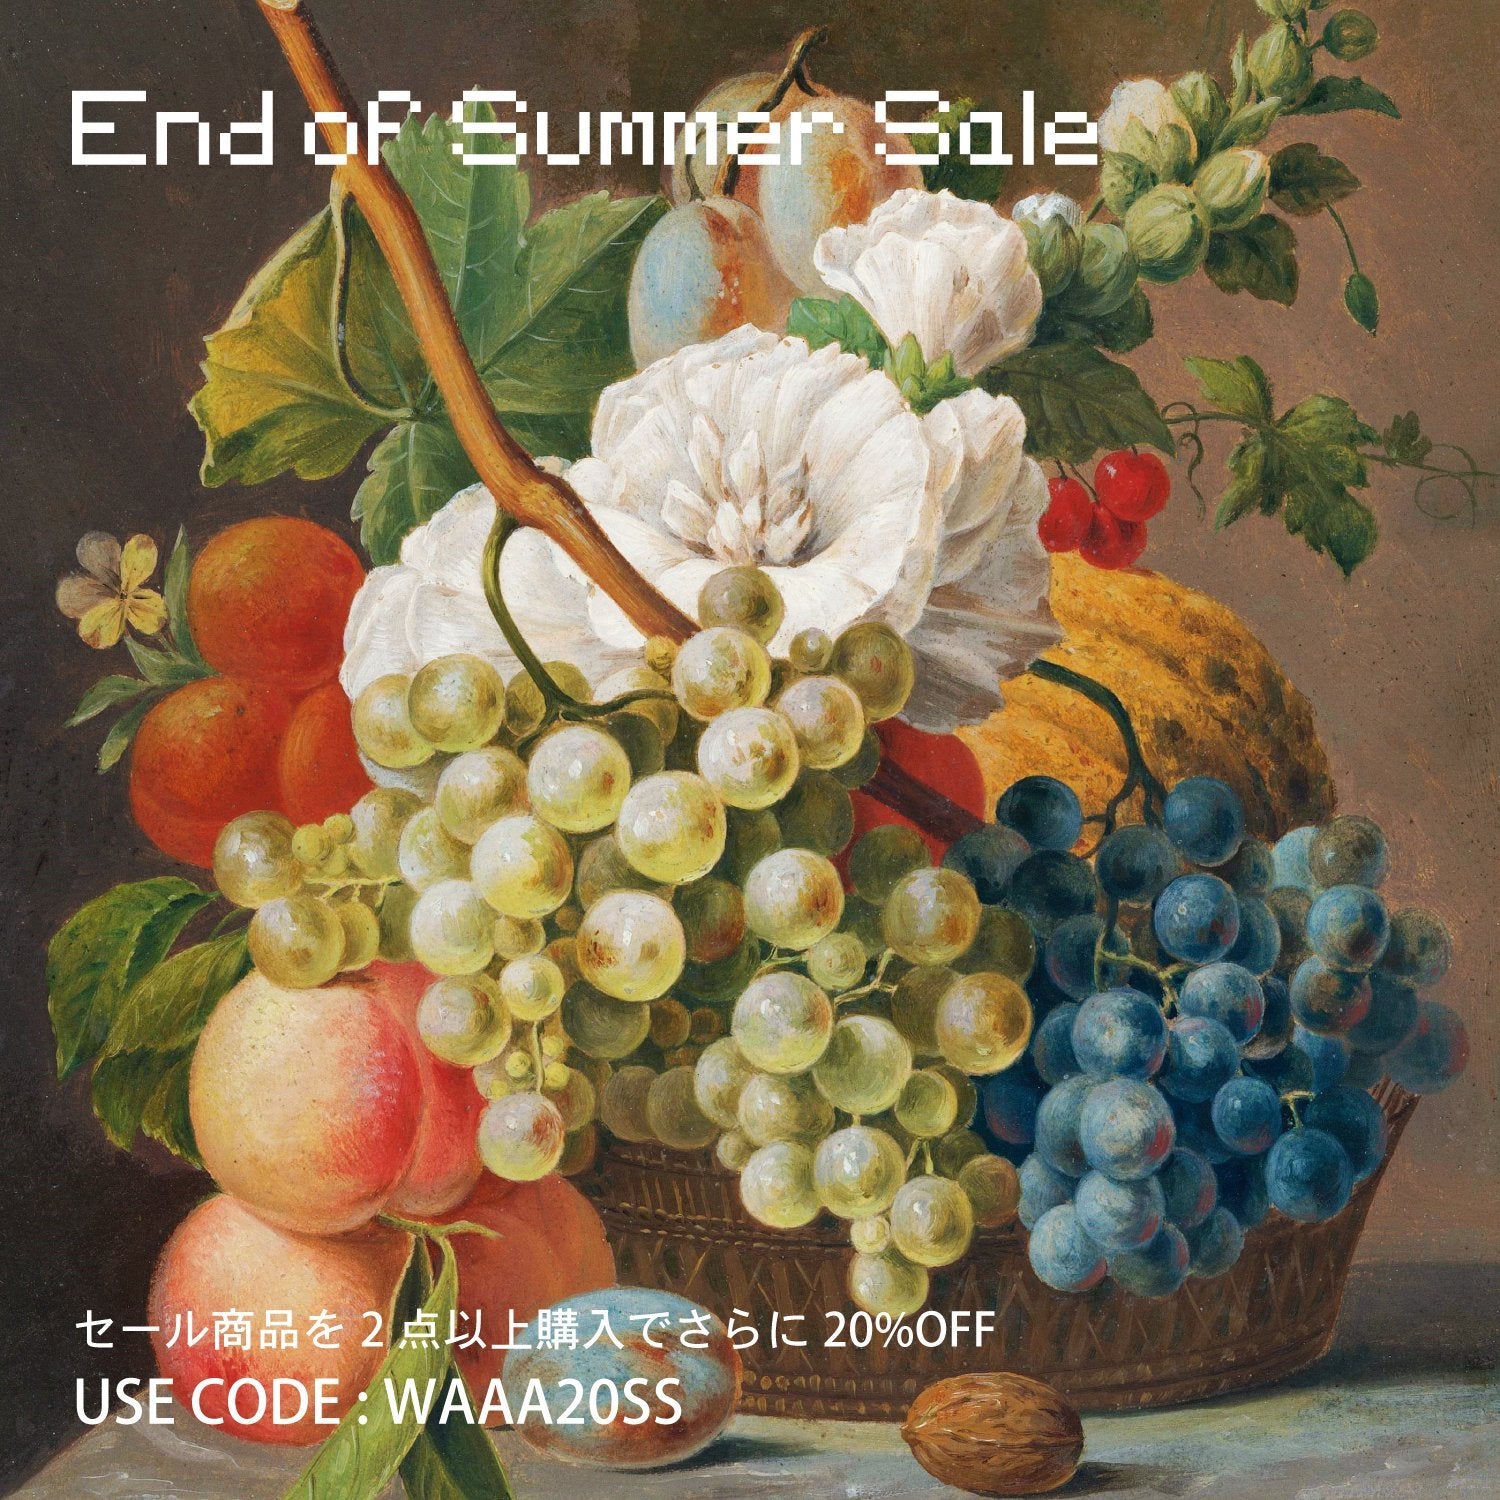 End of Summer Sale開催のお知らせ - WEAREALLANIMALS